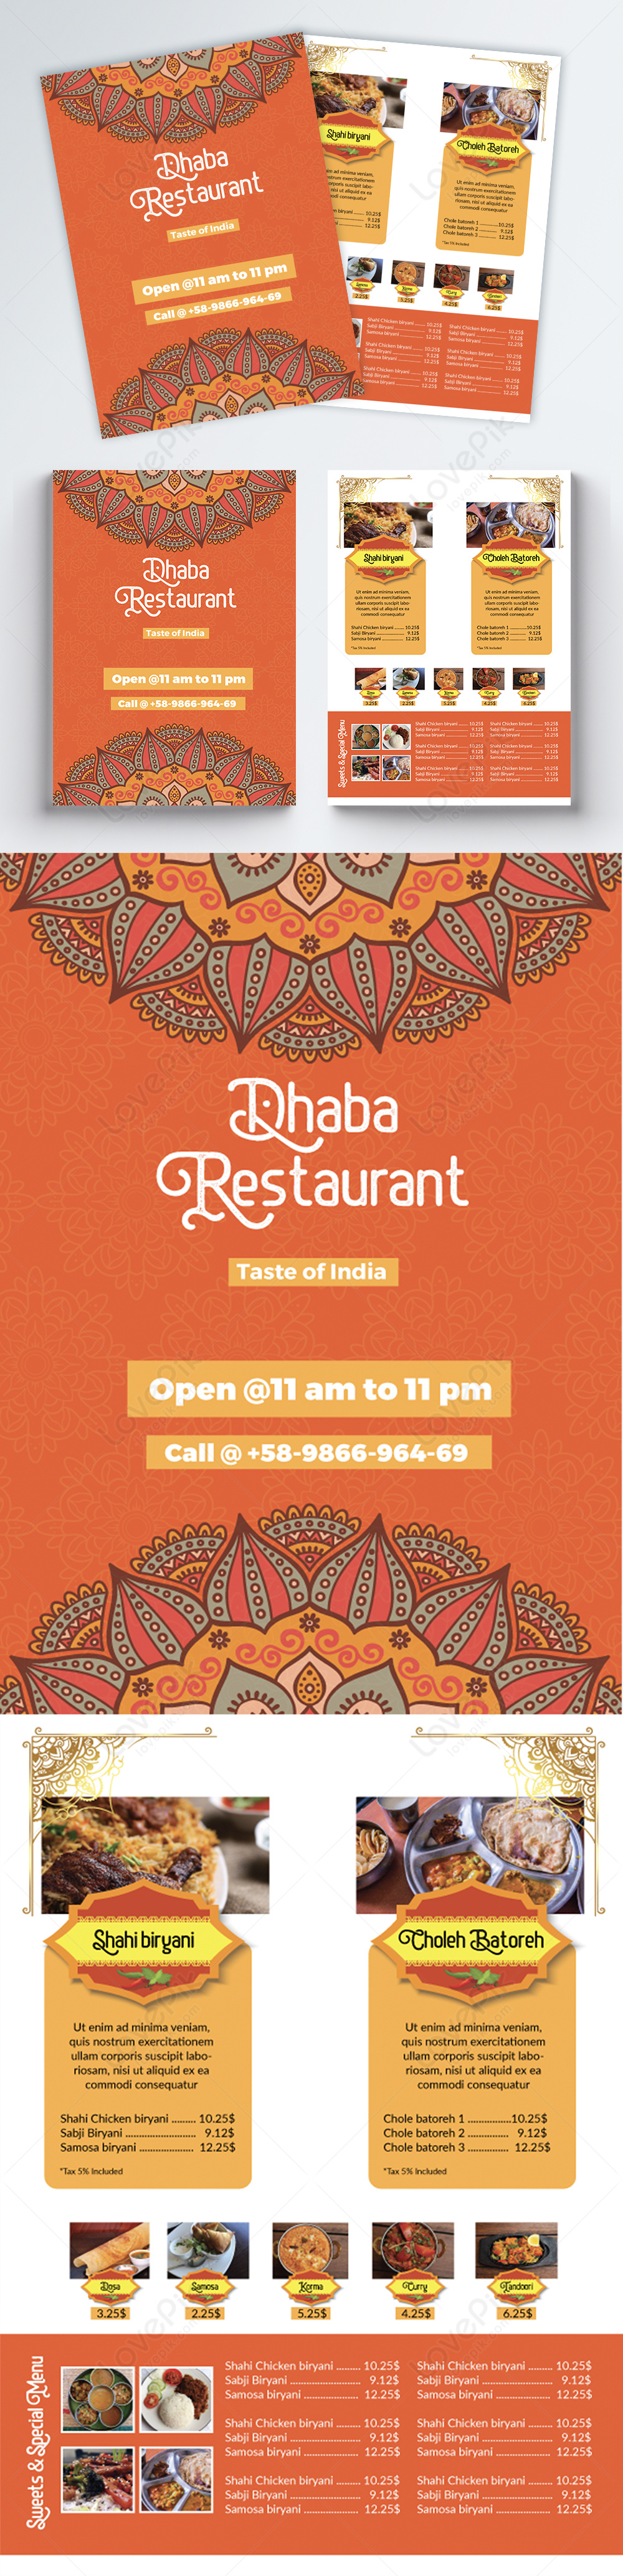 Modern Indian Restaurant Menu Template Image Picture Free Download Lovepik Com